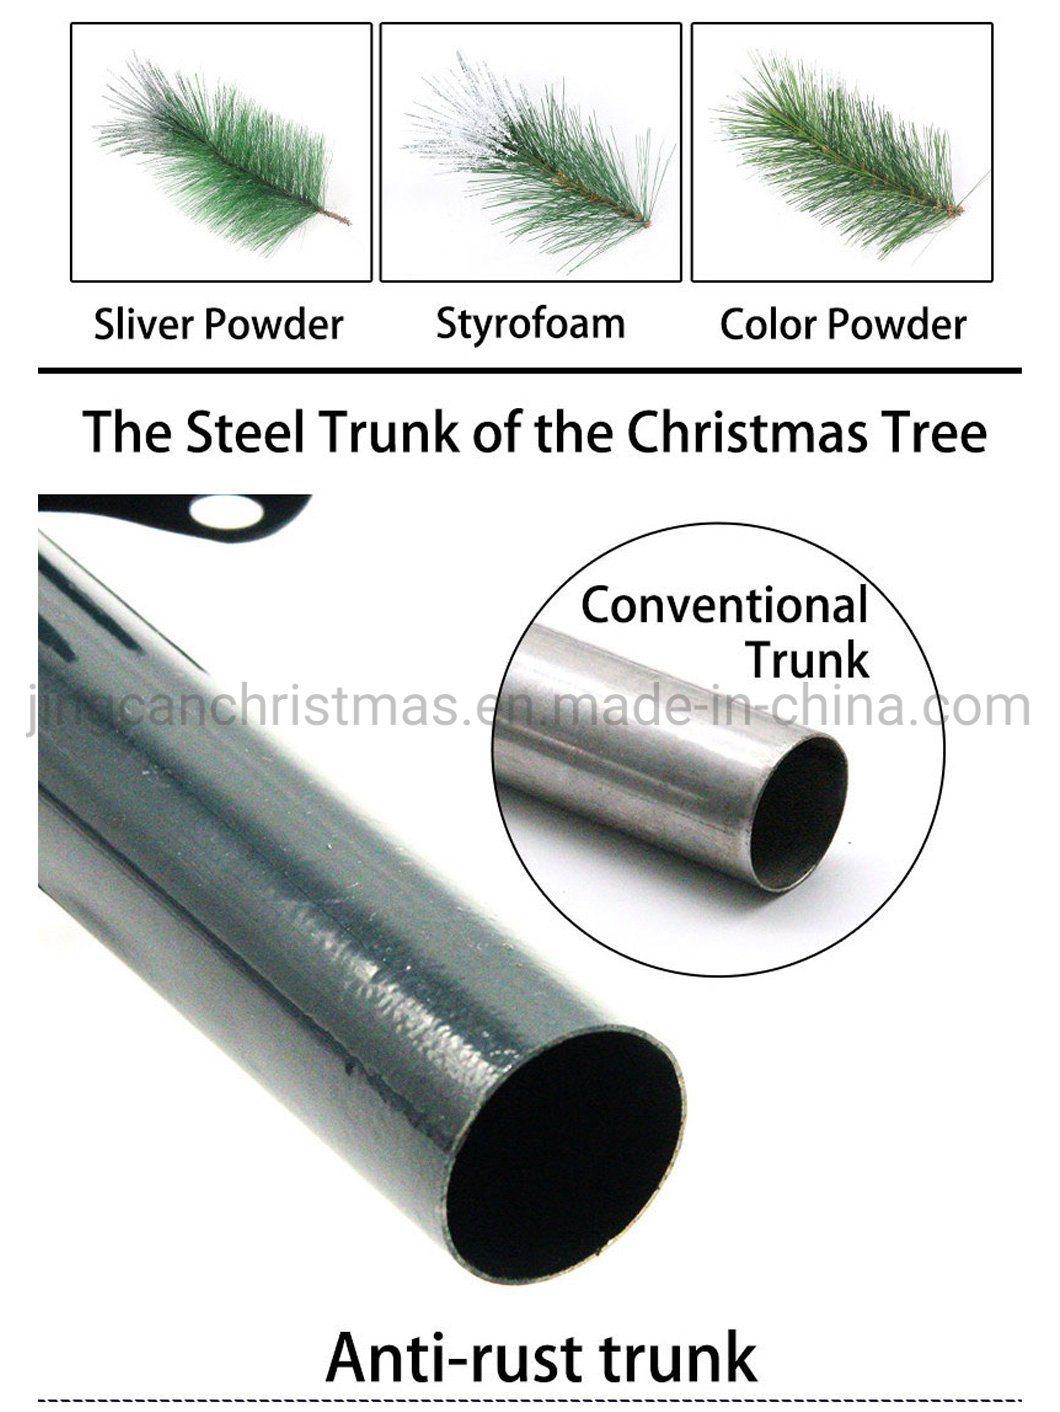 DEC. Metu Black PVC Full Tied Christmas Tree